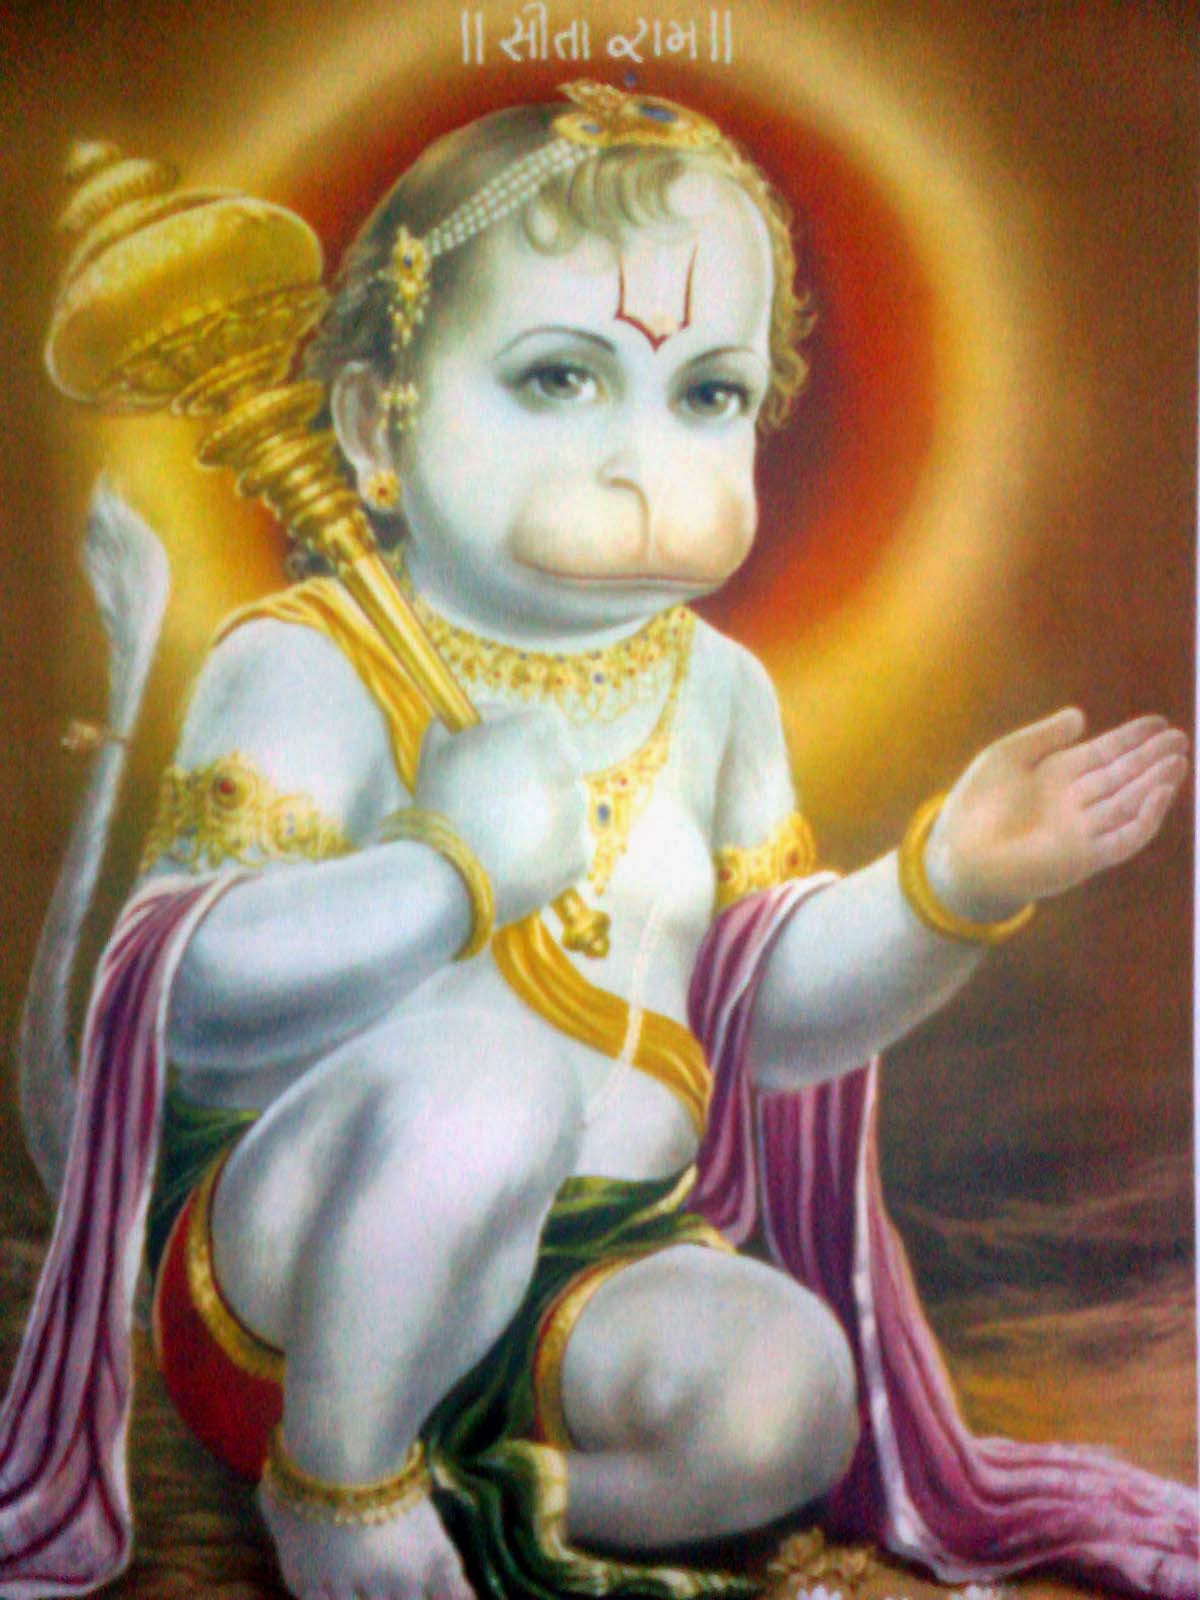 image of baby hanuman bal hanuman image baby hanuman with